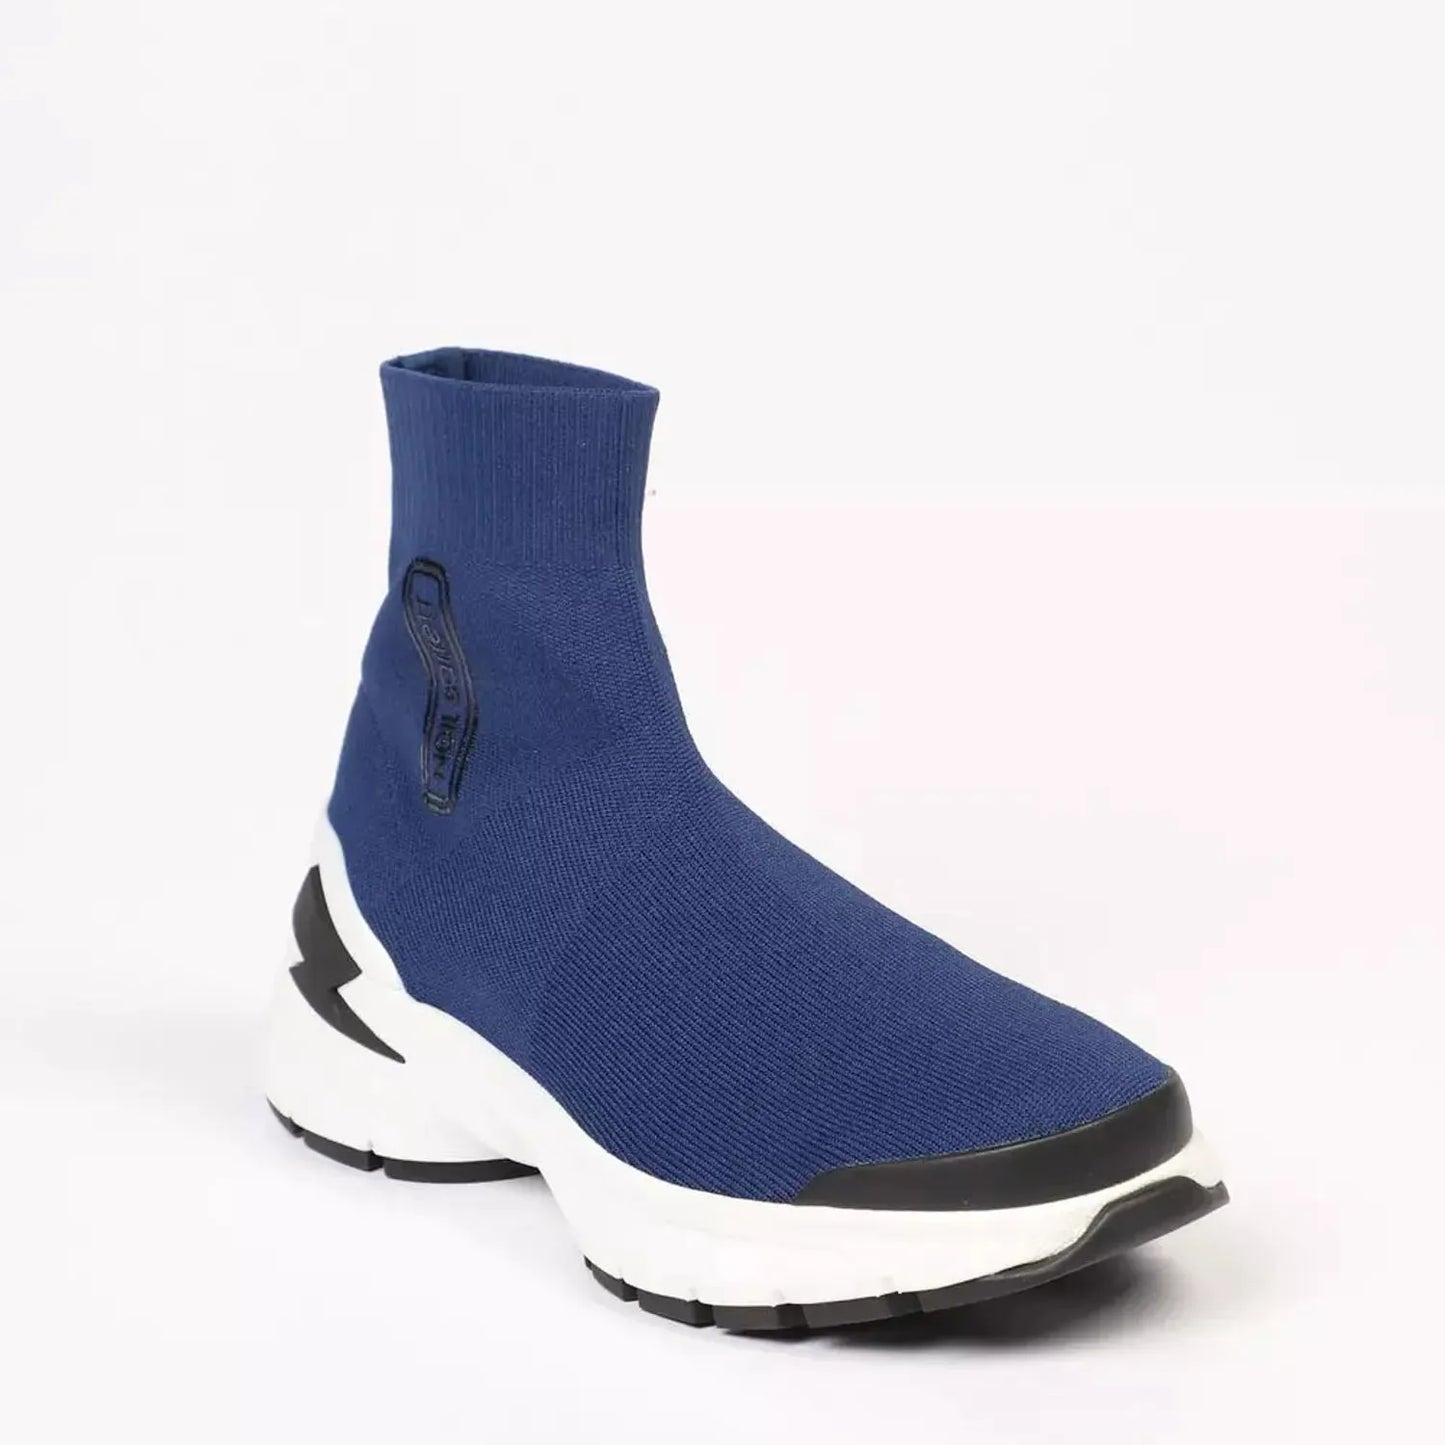 Neil Barrett Electric Bolt Sock Sneakers in Blue blue-textile-lining-sneaker stock_product_image_21105_435009901-20-b83d5b6d-05a.webp